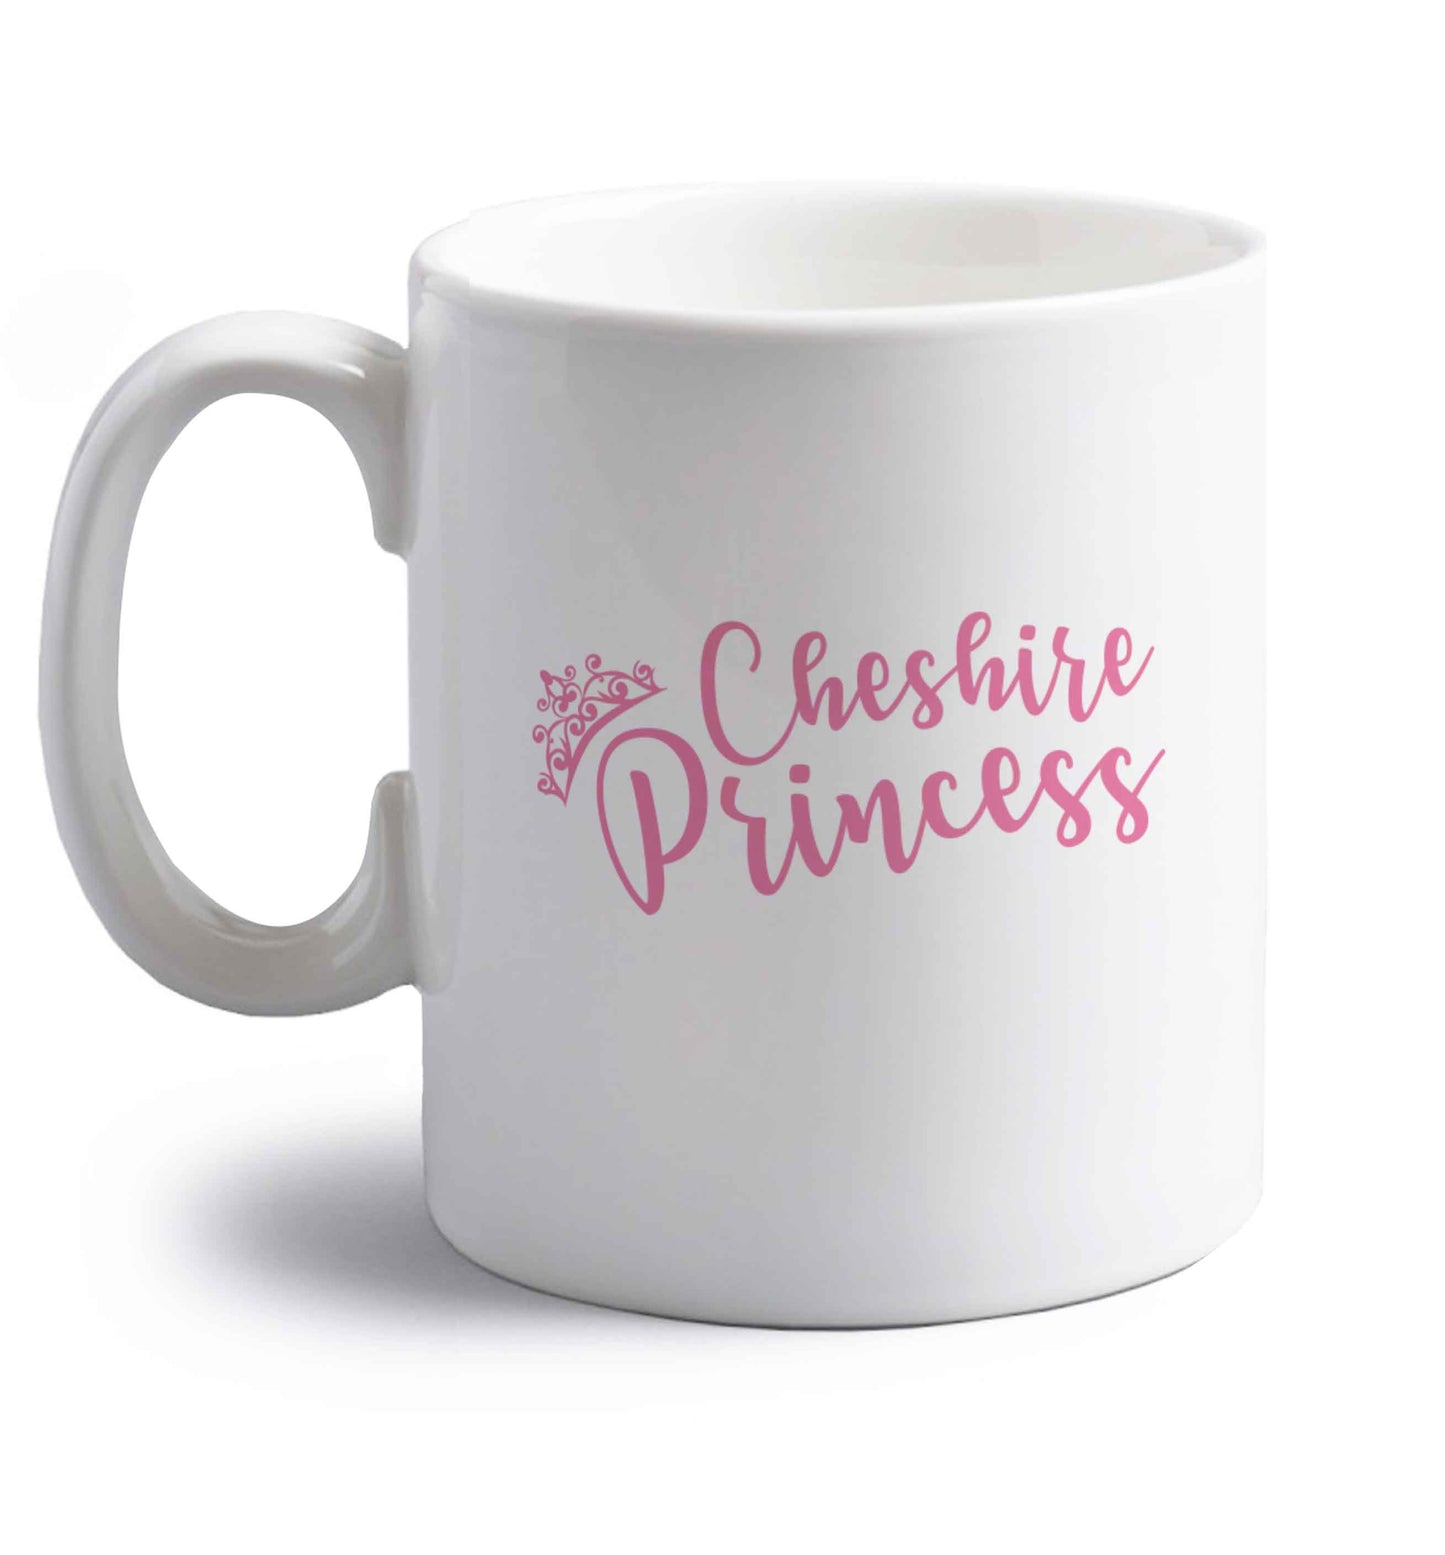 Cheshire princess right handed white ceramic mug 